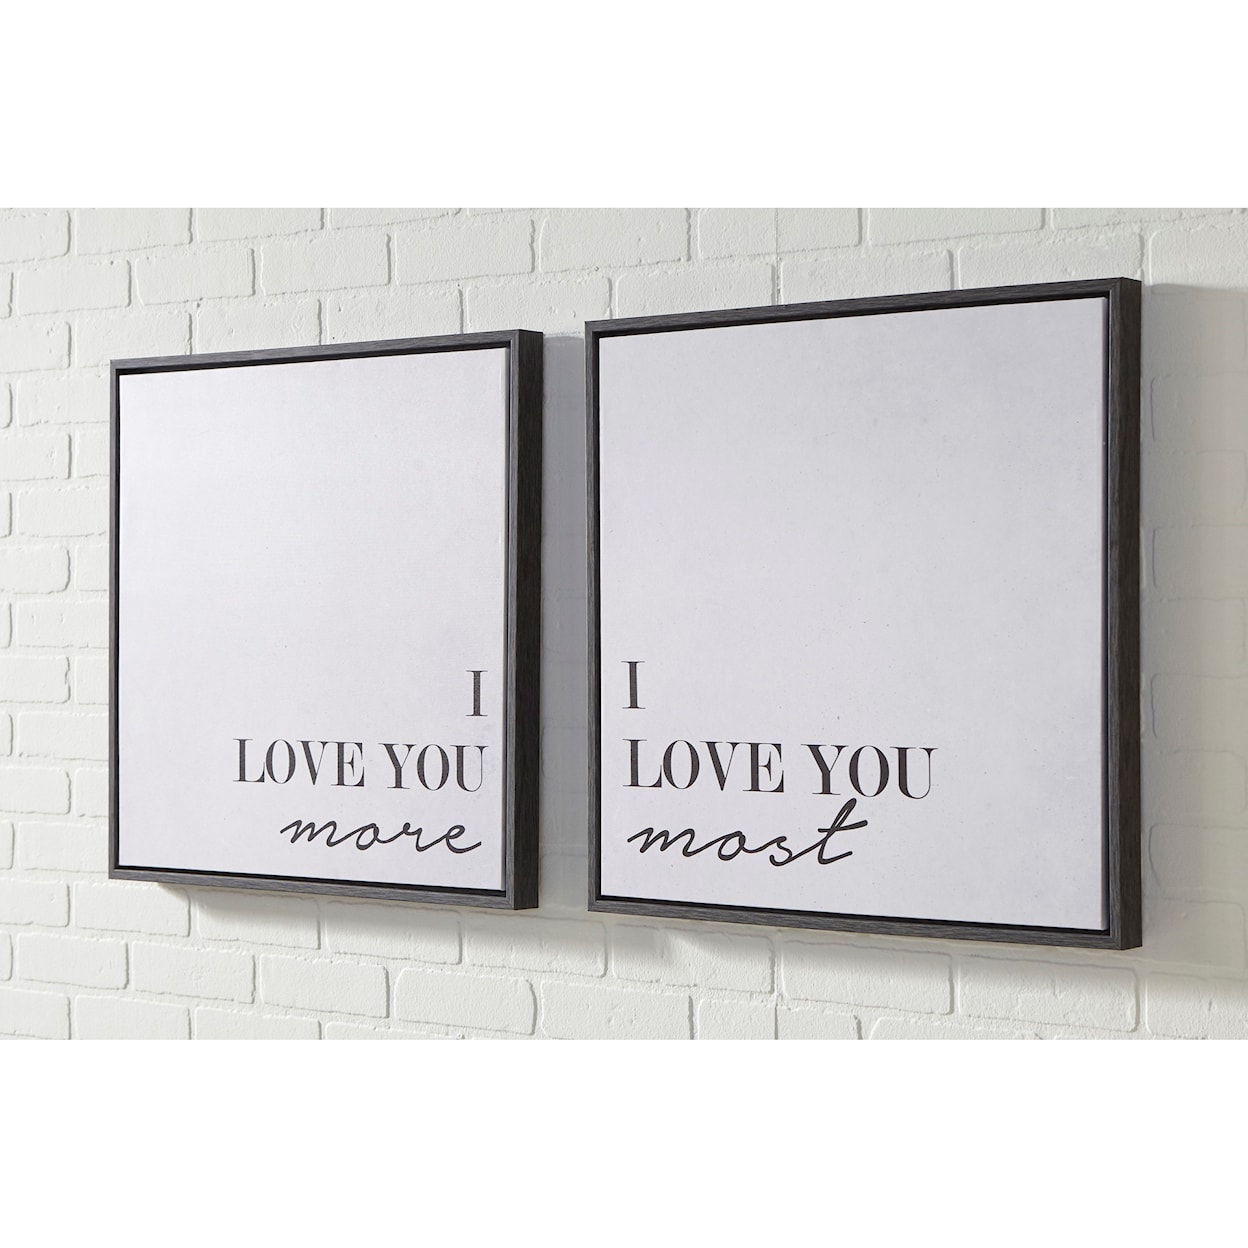 Ashley Furniture Signature Design Wall Art Adeline Black/White Wall Art Set